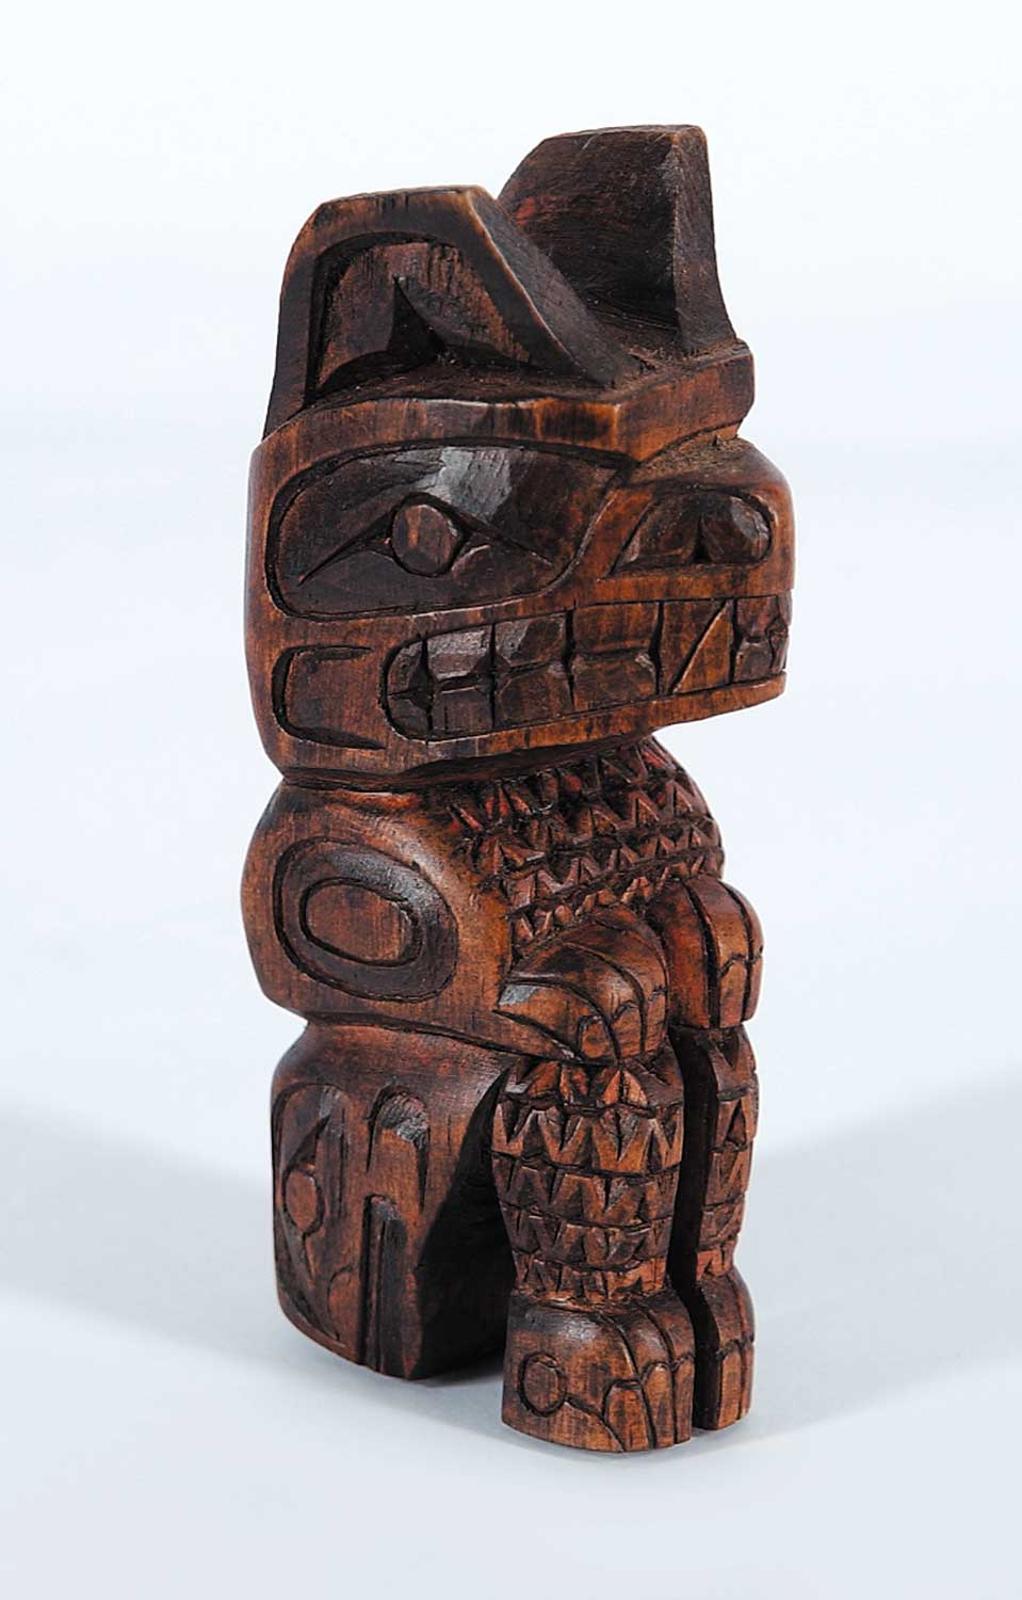 C. Lande - Untitled - Miniature Bear Totem Pole